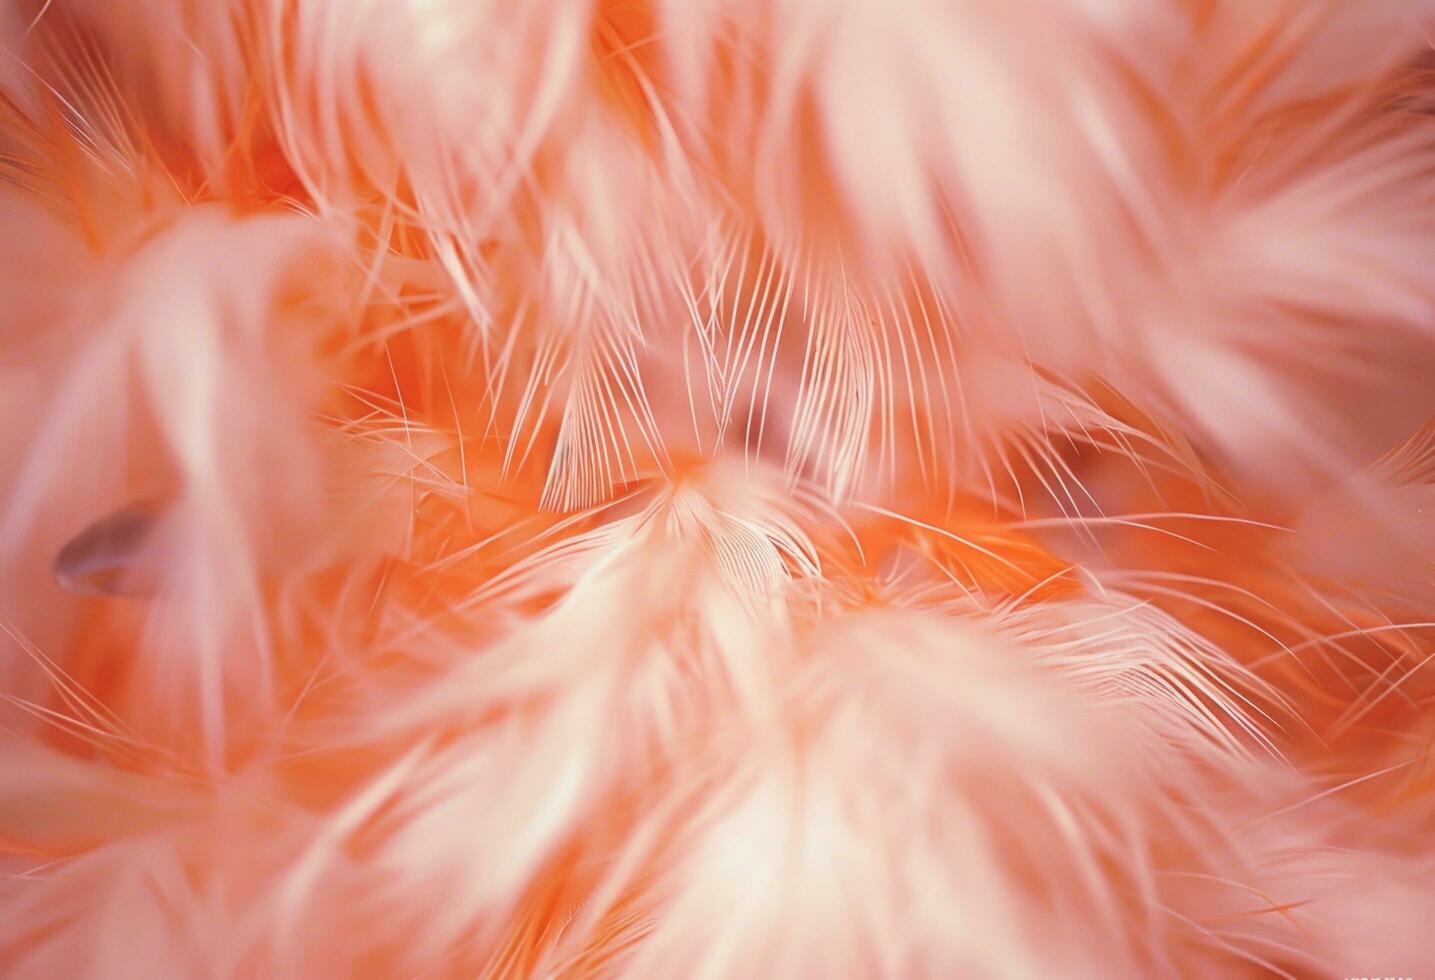 AI generated an orange fur texture close up, digital manipulation photo